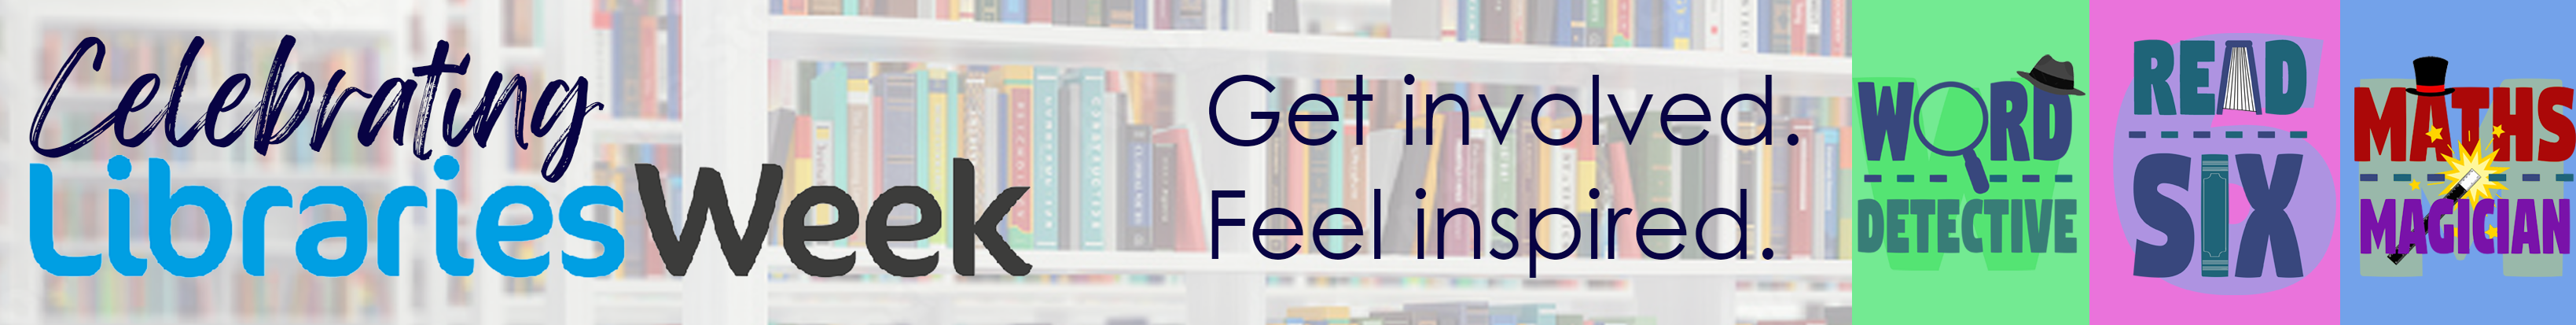 Celebrating Libraries Week: Get involved, feel inspired.